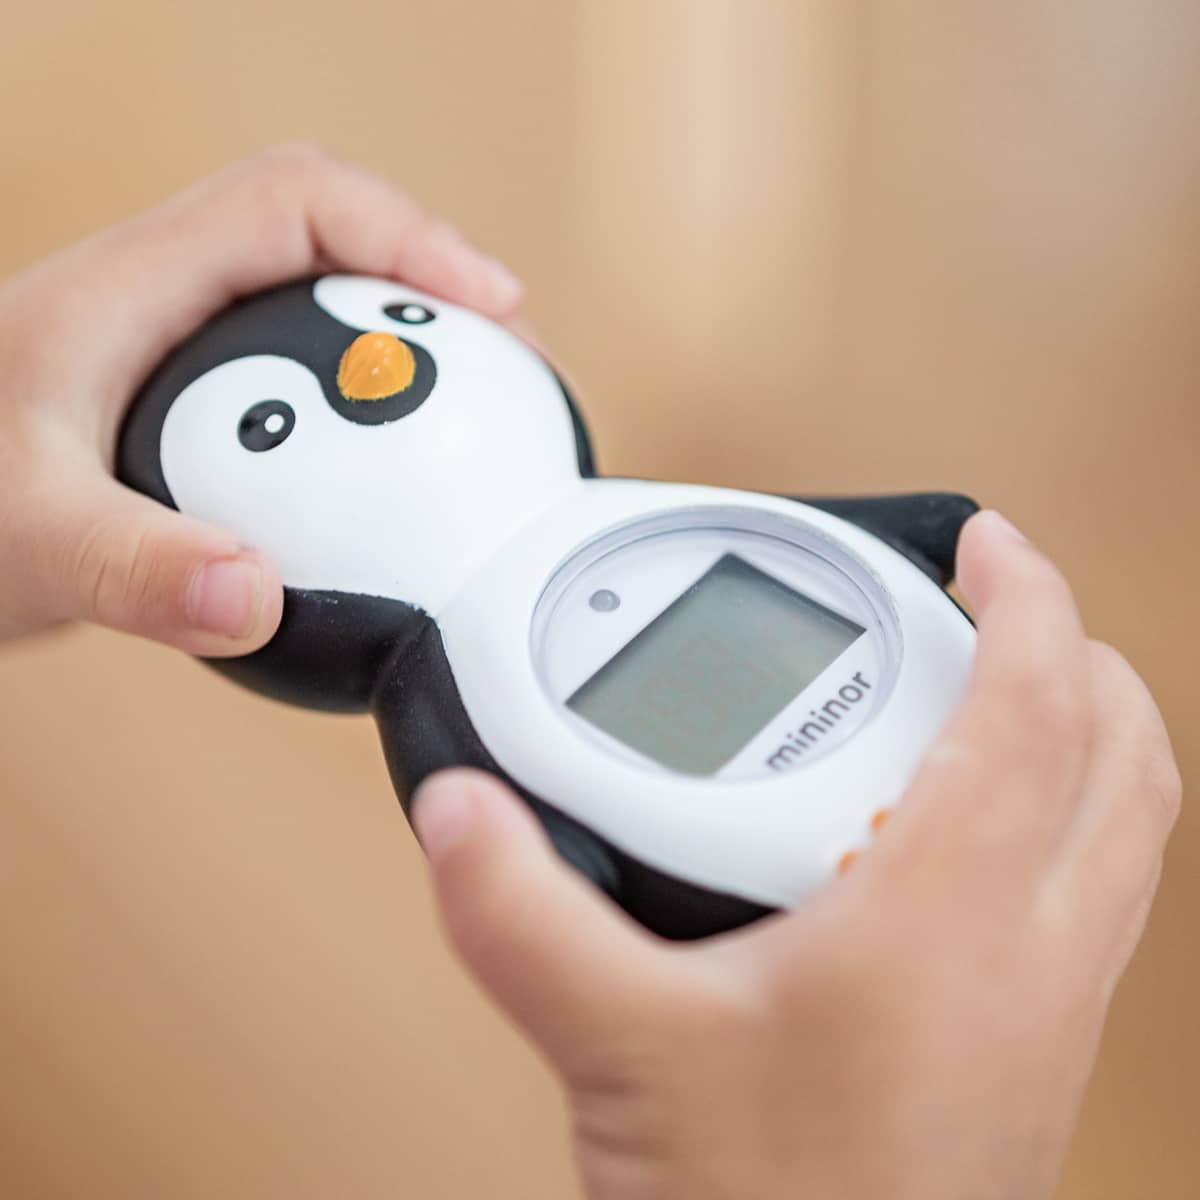 Mininor Room & Bath Thermometer - Penguin